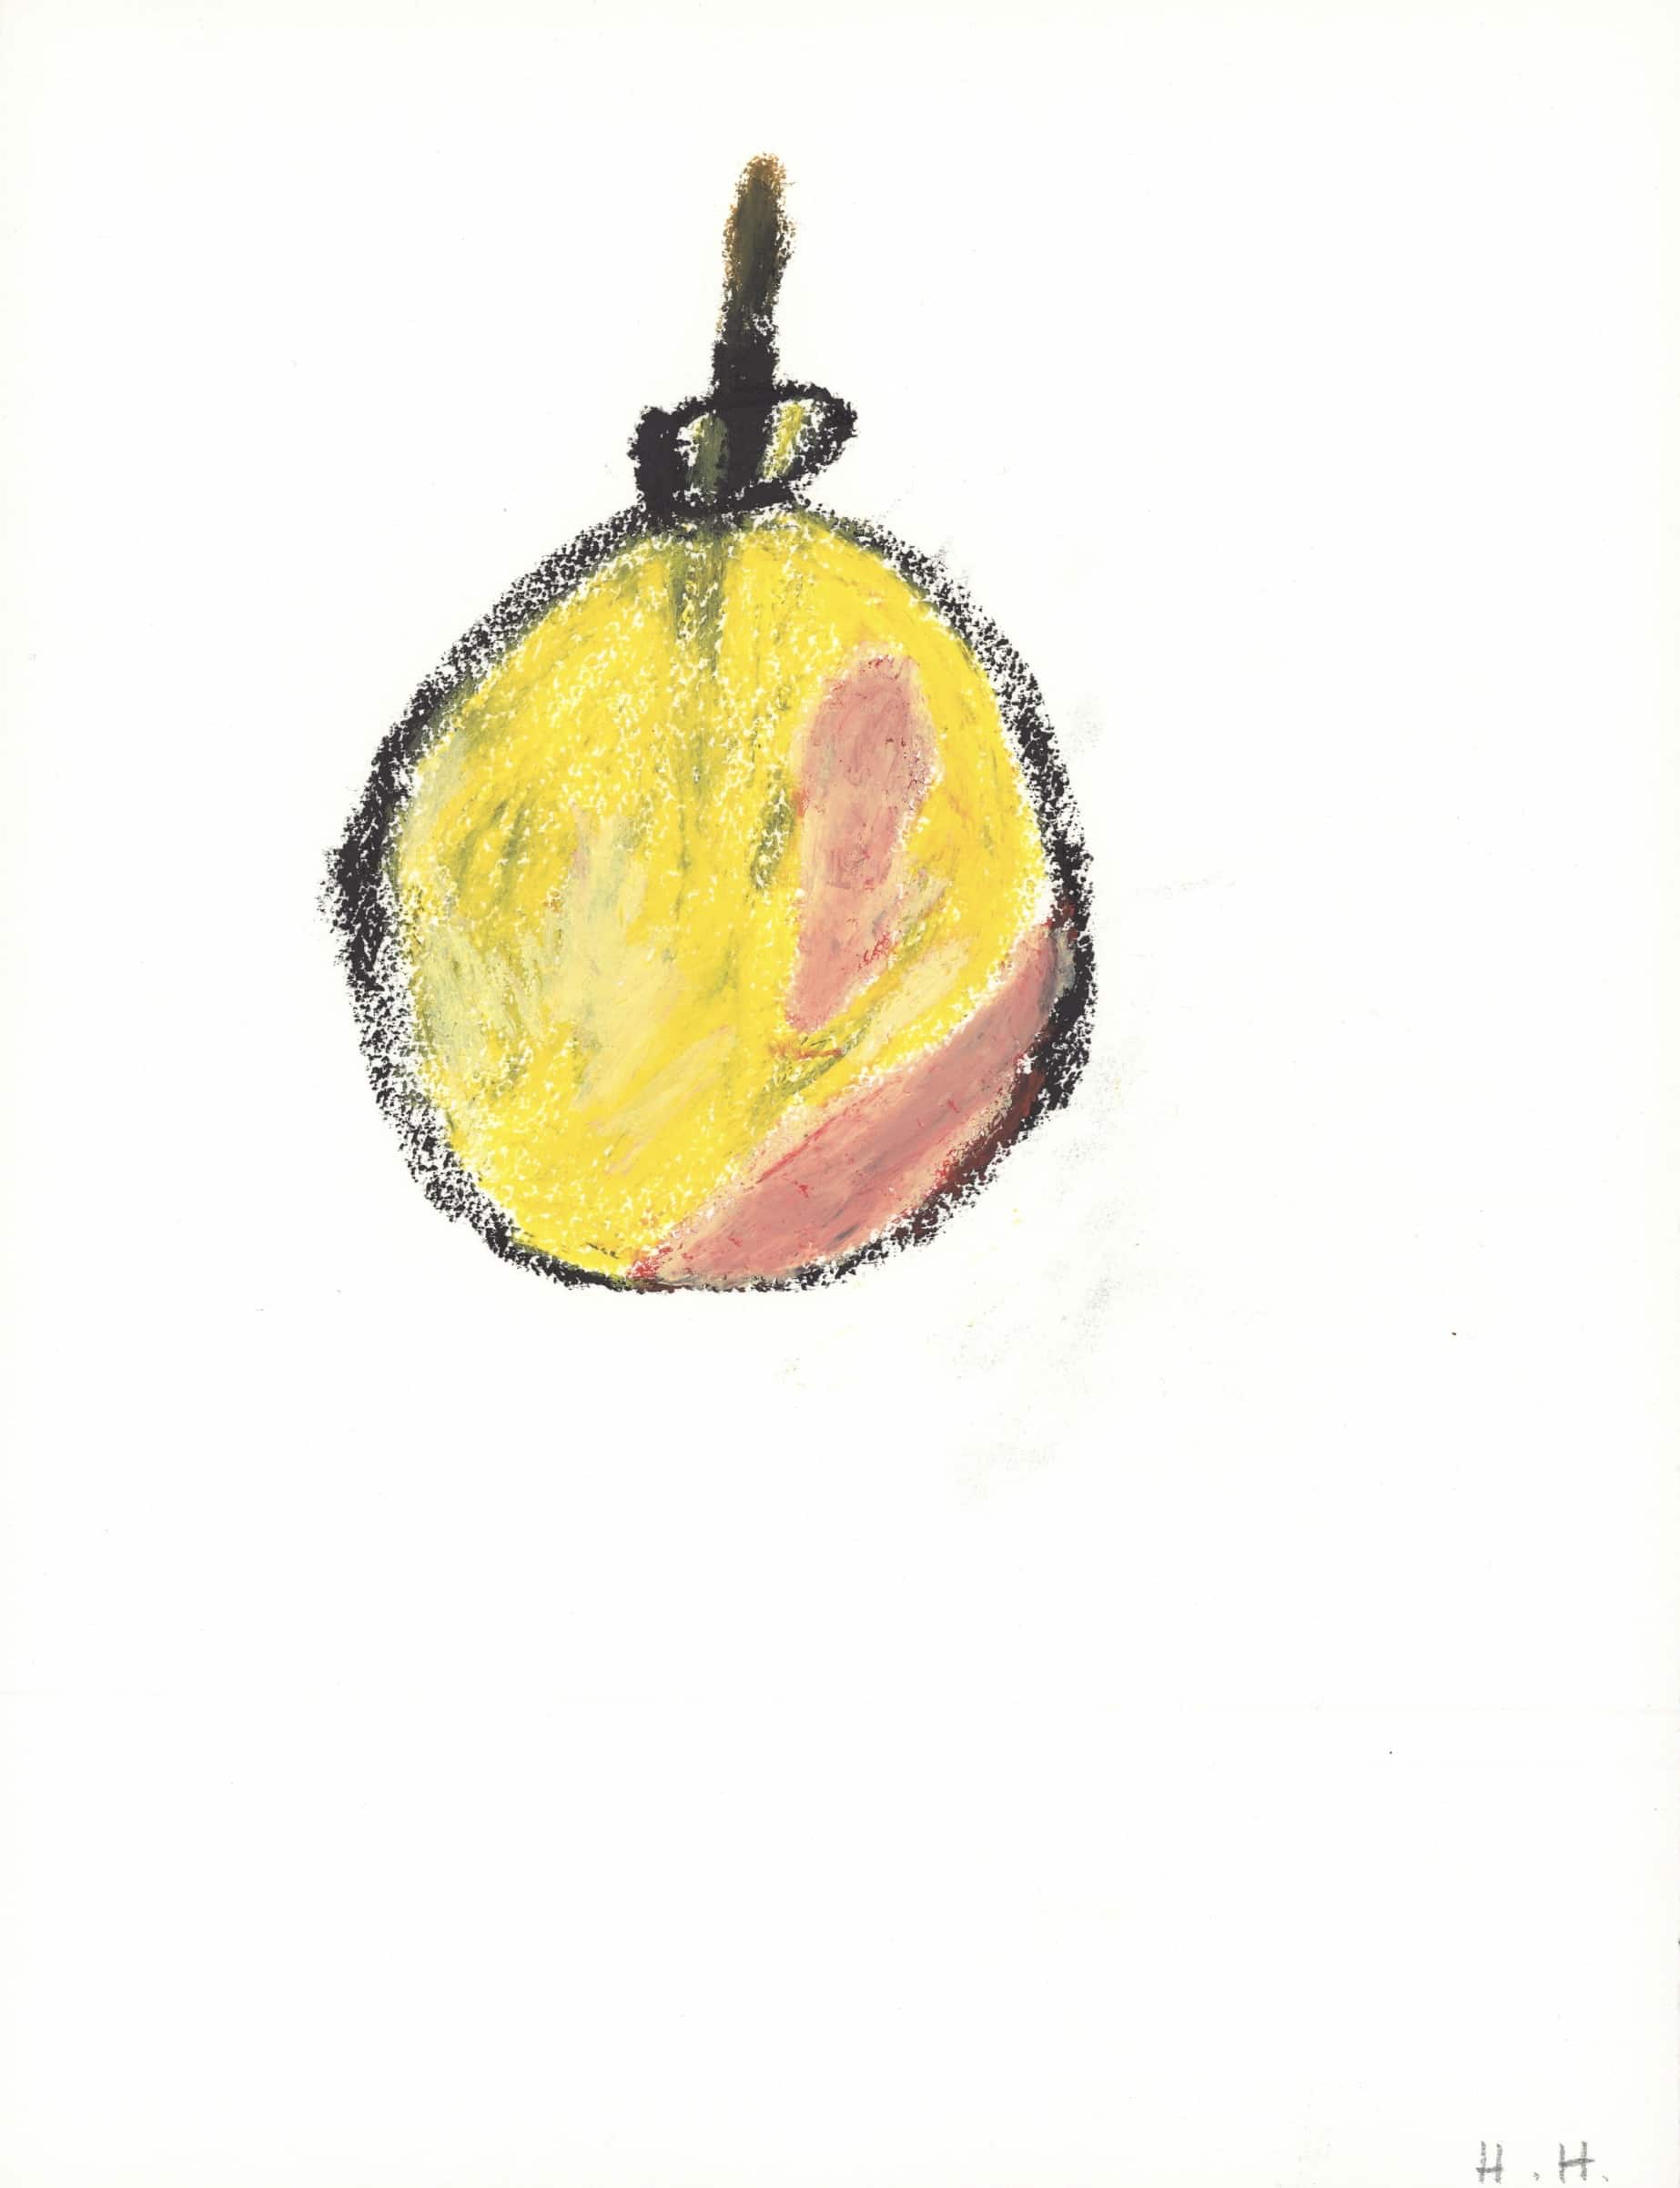 hladisch helmut - Apfel / Apple